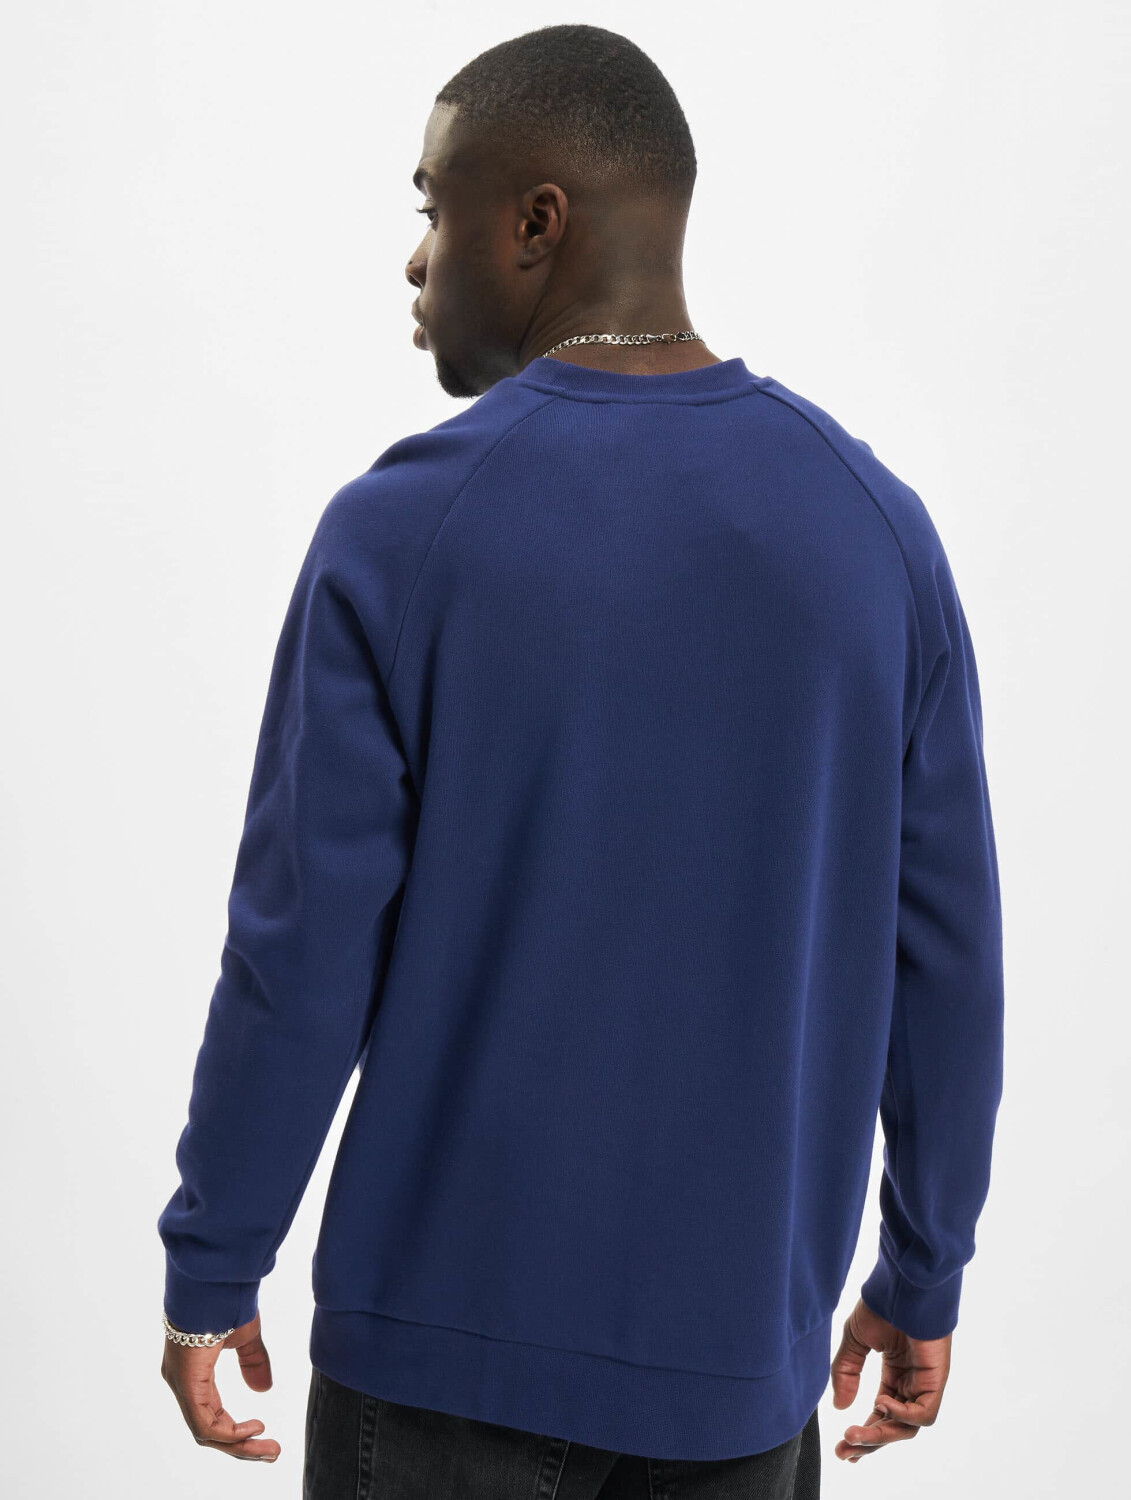 Buy Adidas adicolor Classics Trefoil Sweatshirt dark blue (H06654) from  £22.99 (Today) – Best Deals on